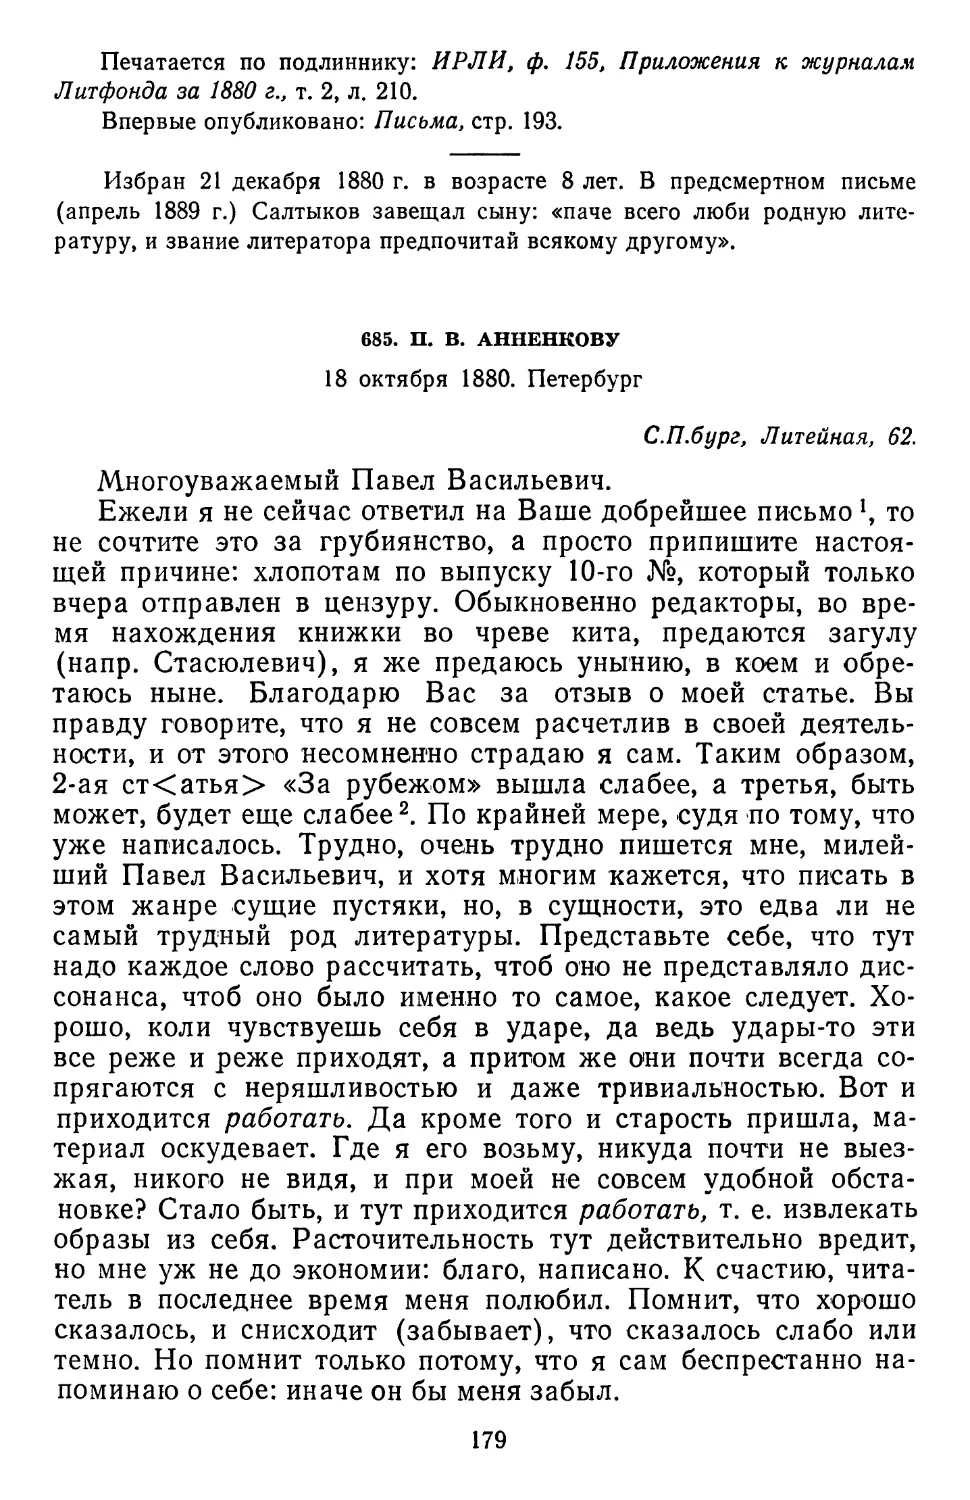 685.П. В. Анненкову. 18 октября 1880. Петербург